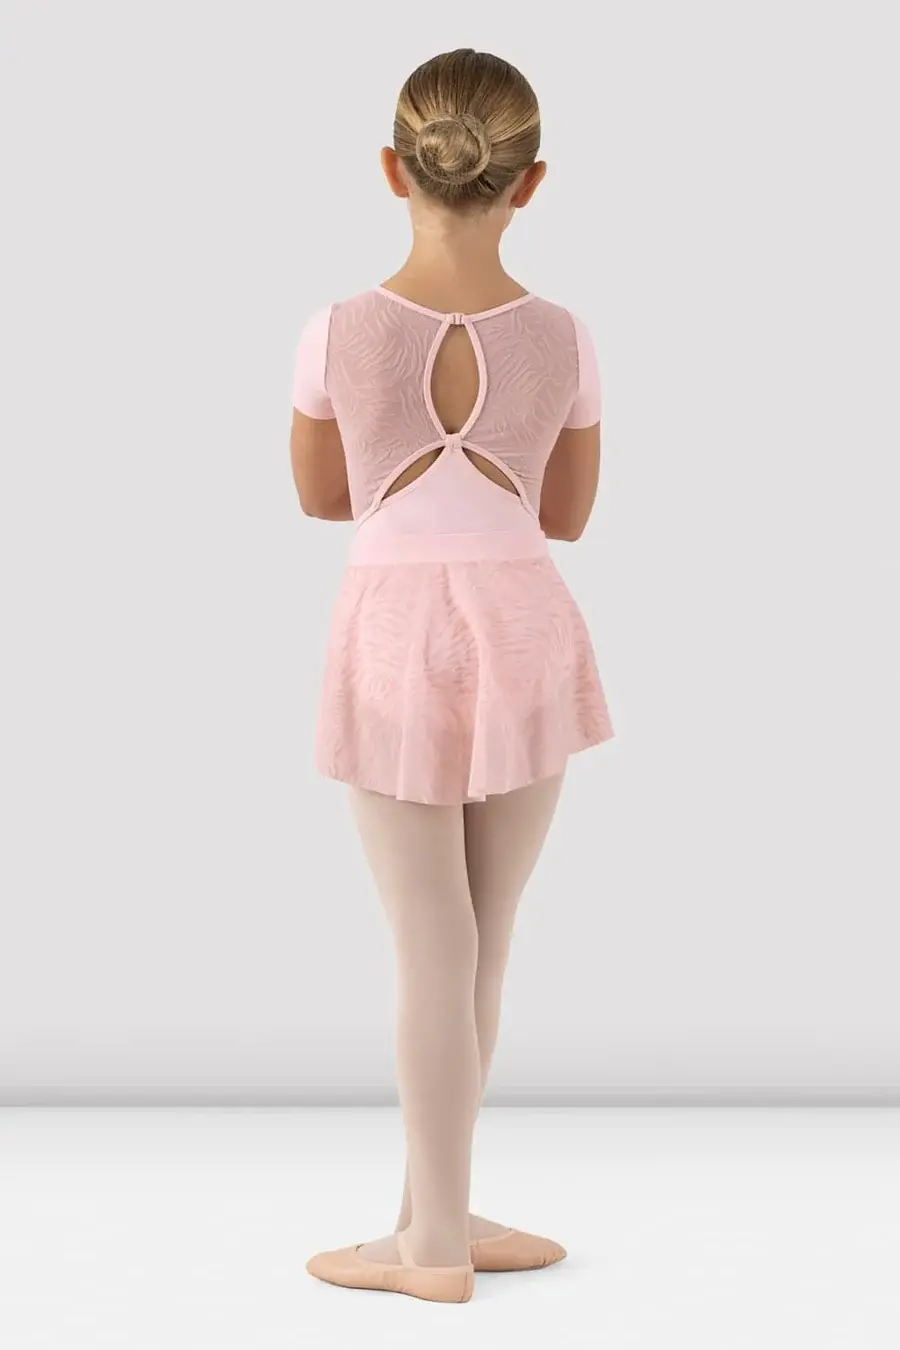 Bloch Girl Ballet Skirt, Bloch CR1171